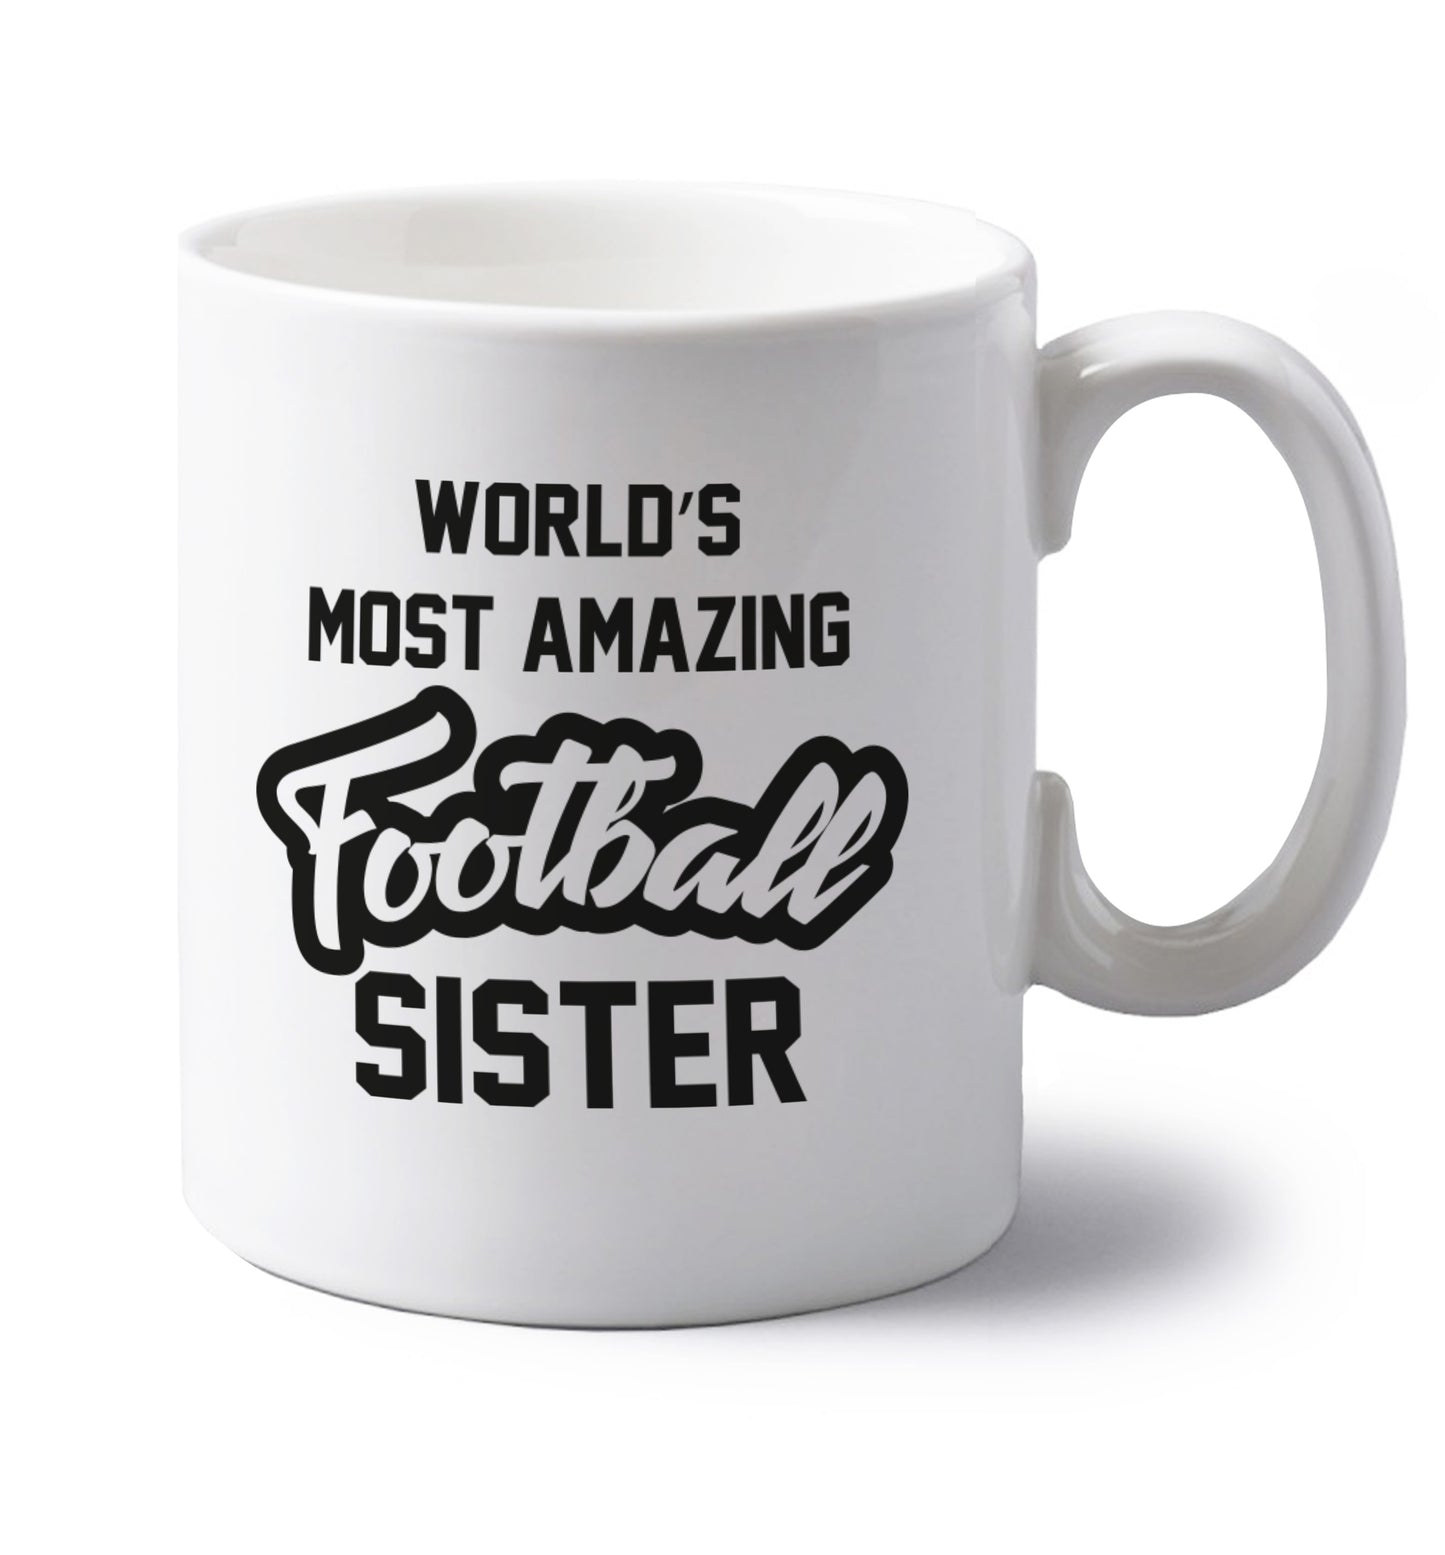 Worlds most amazing football sister left handed white ceramic mug 